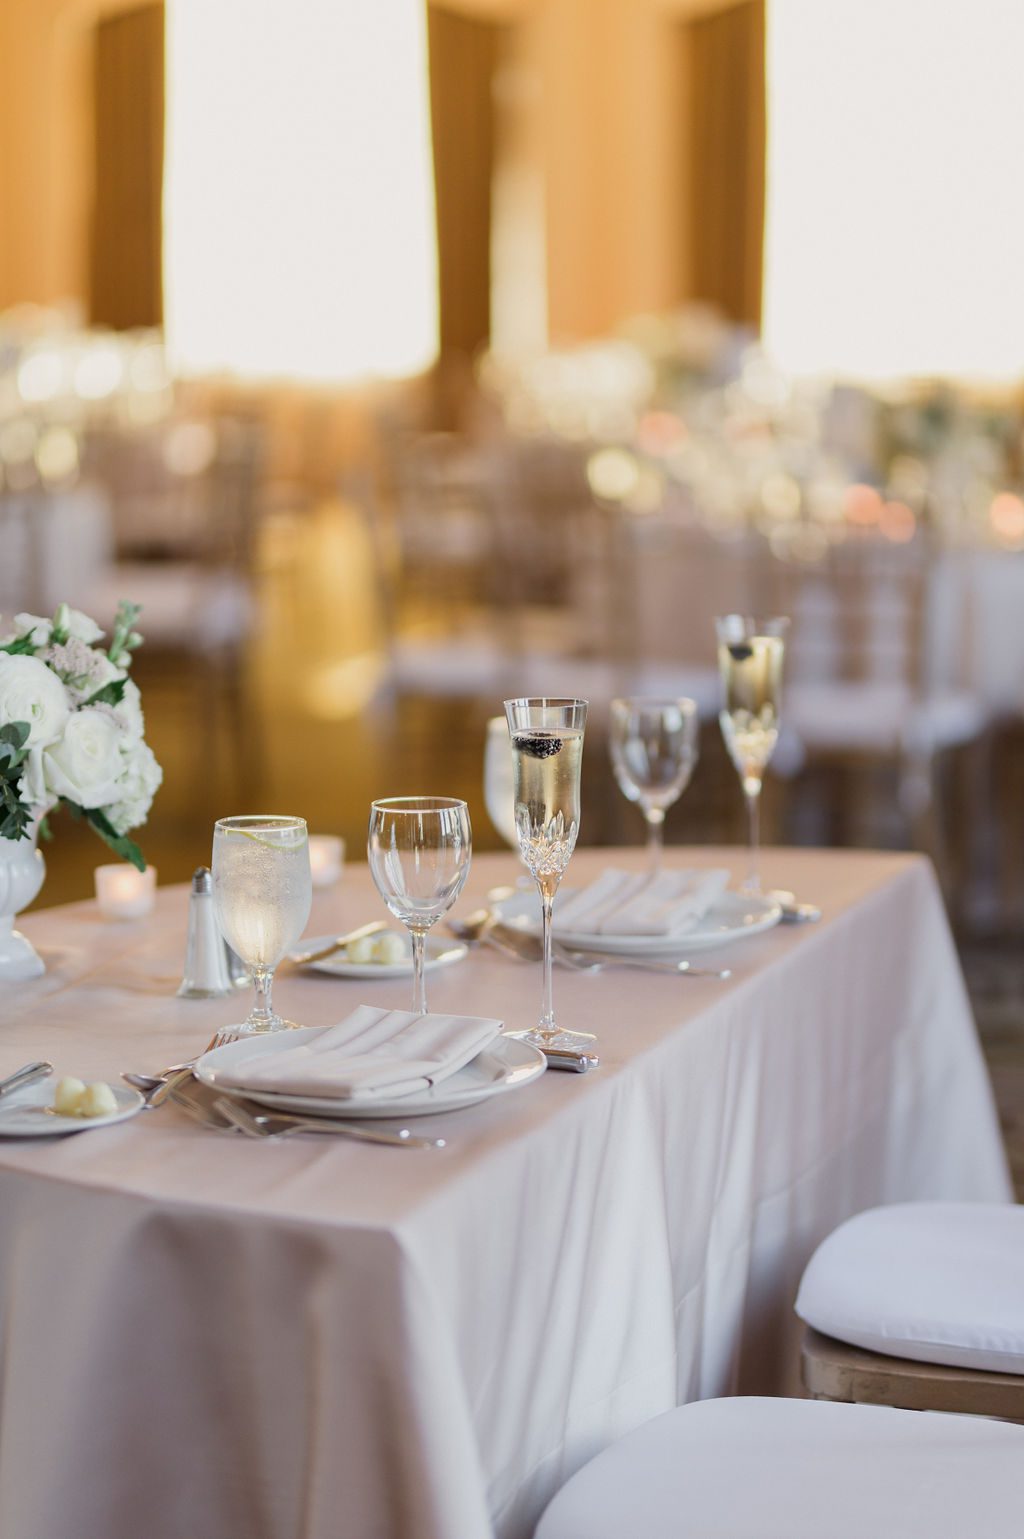 omni parker house wedding champagne toast in wedding reception ballroom